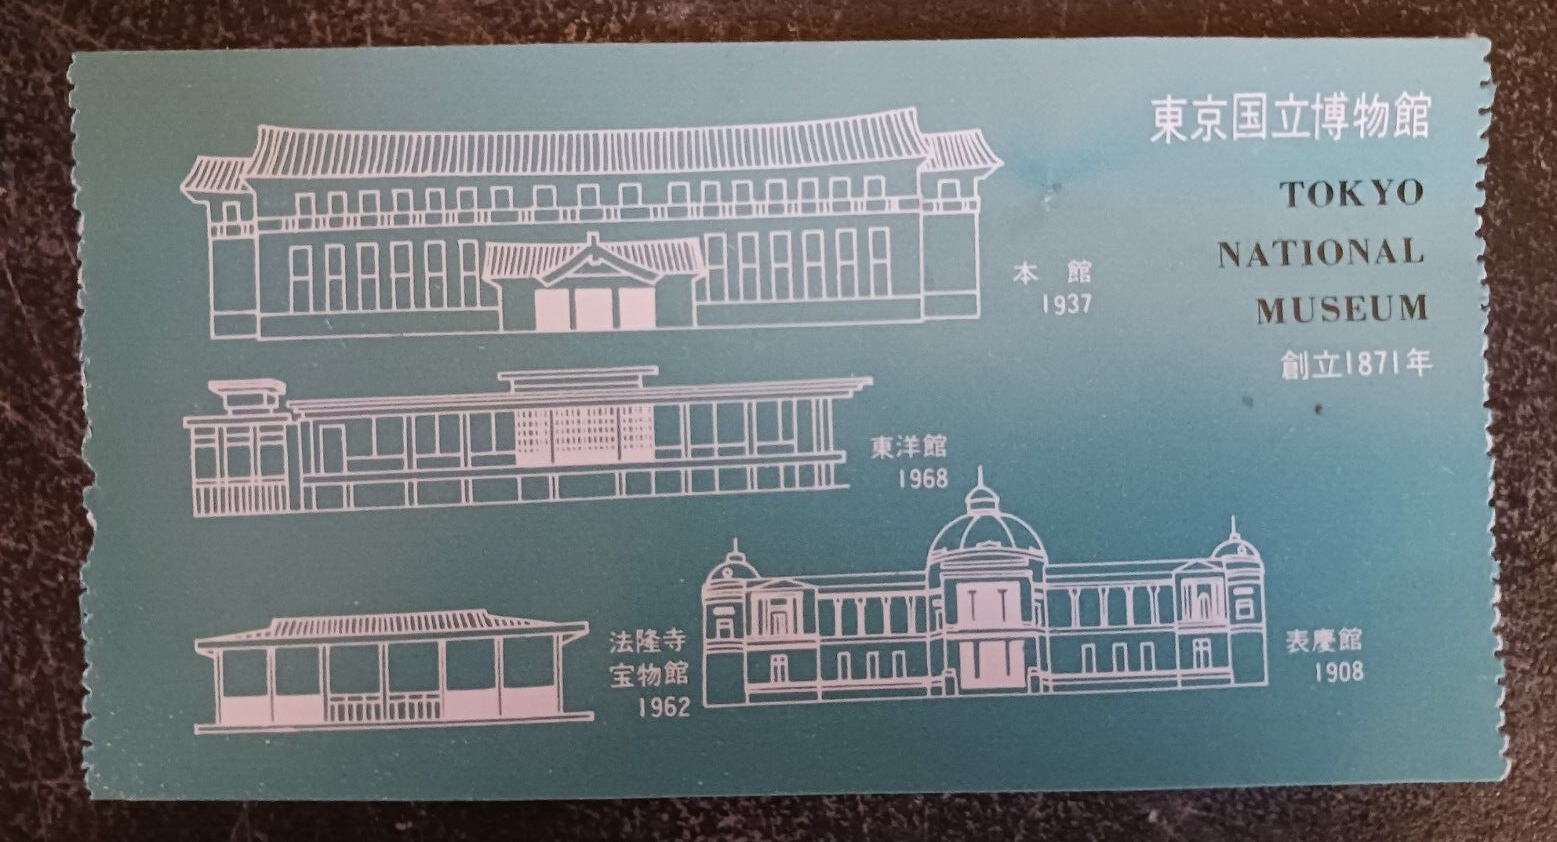 vtg 1970s Tokyo National Museum ticket JAPAN travel ephemera